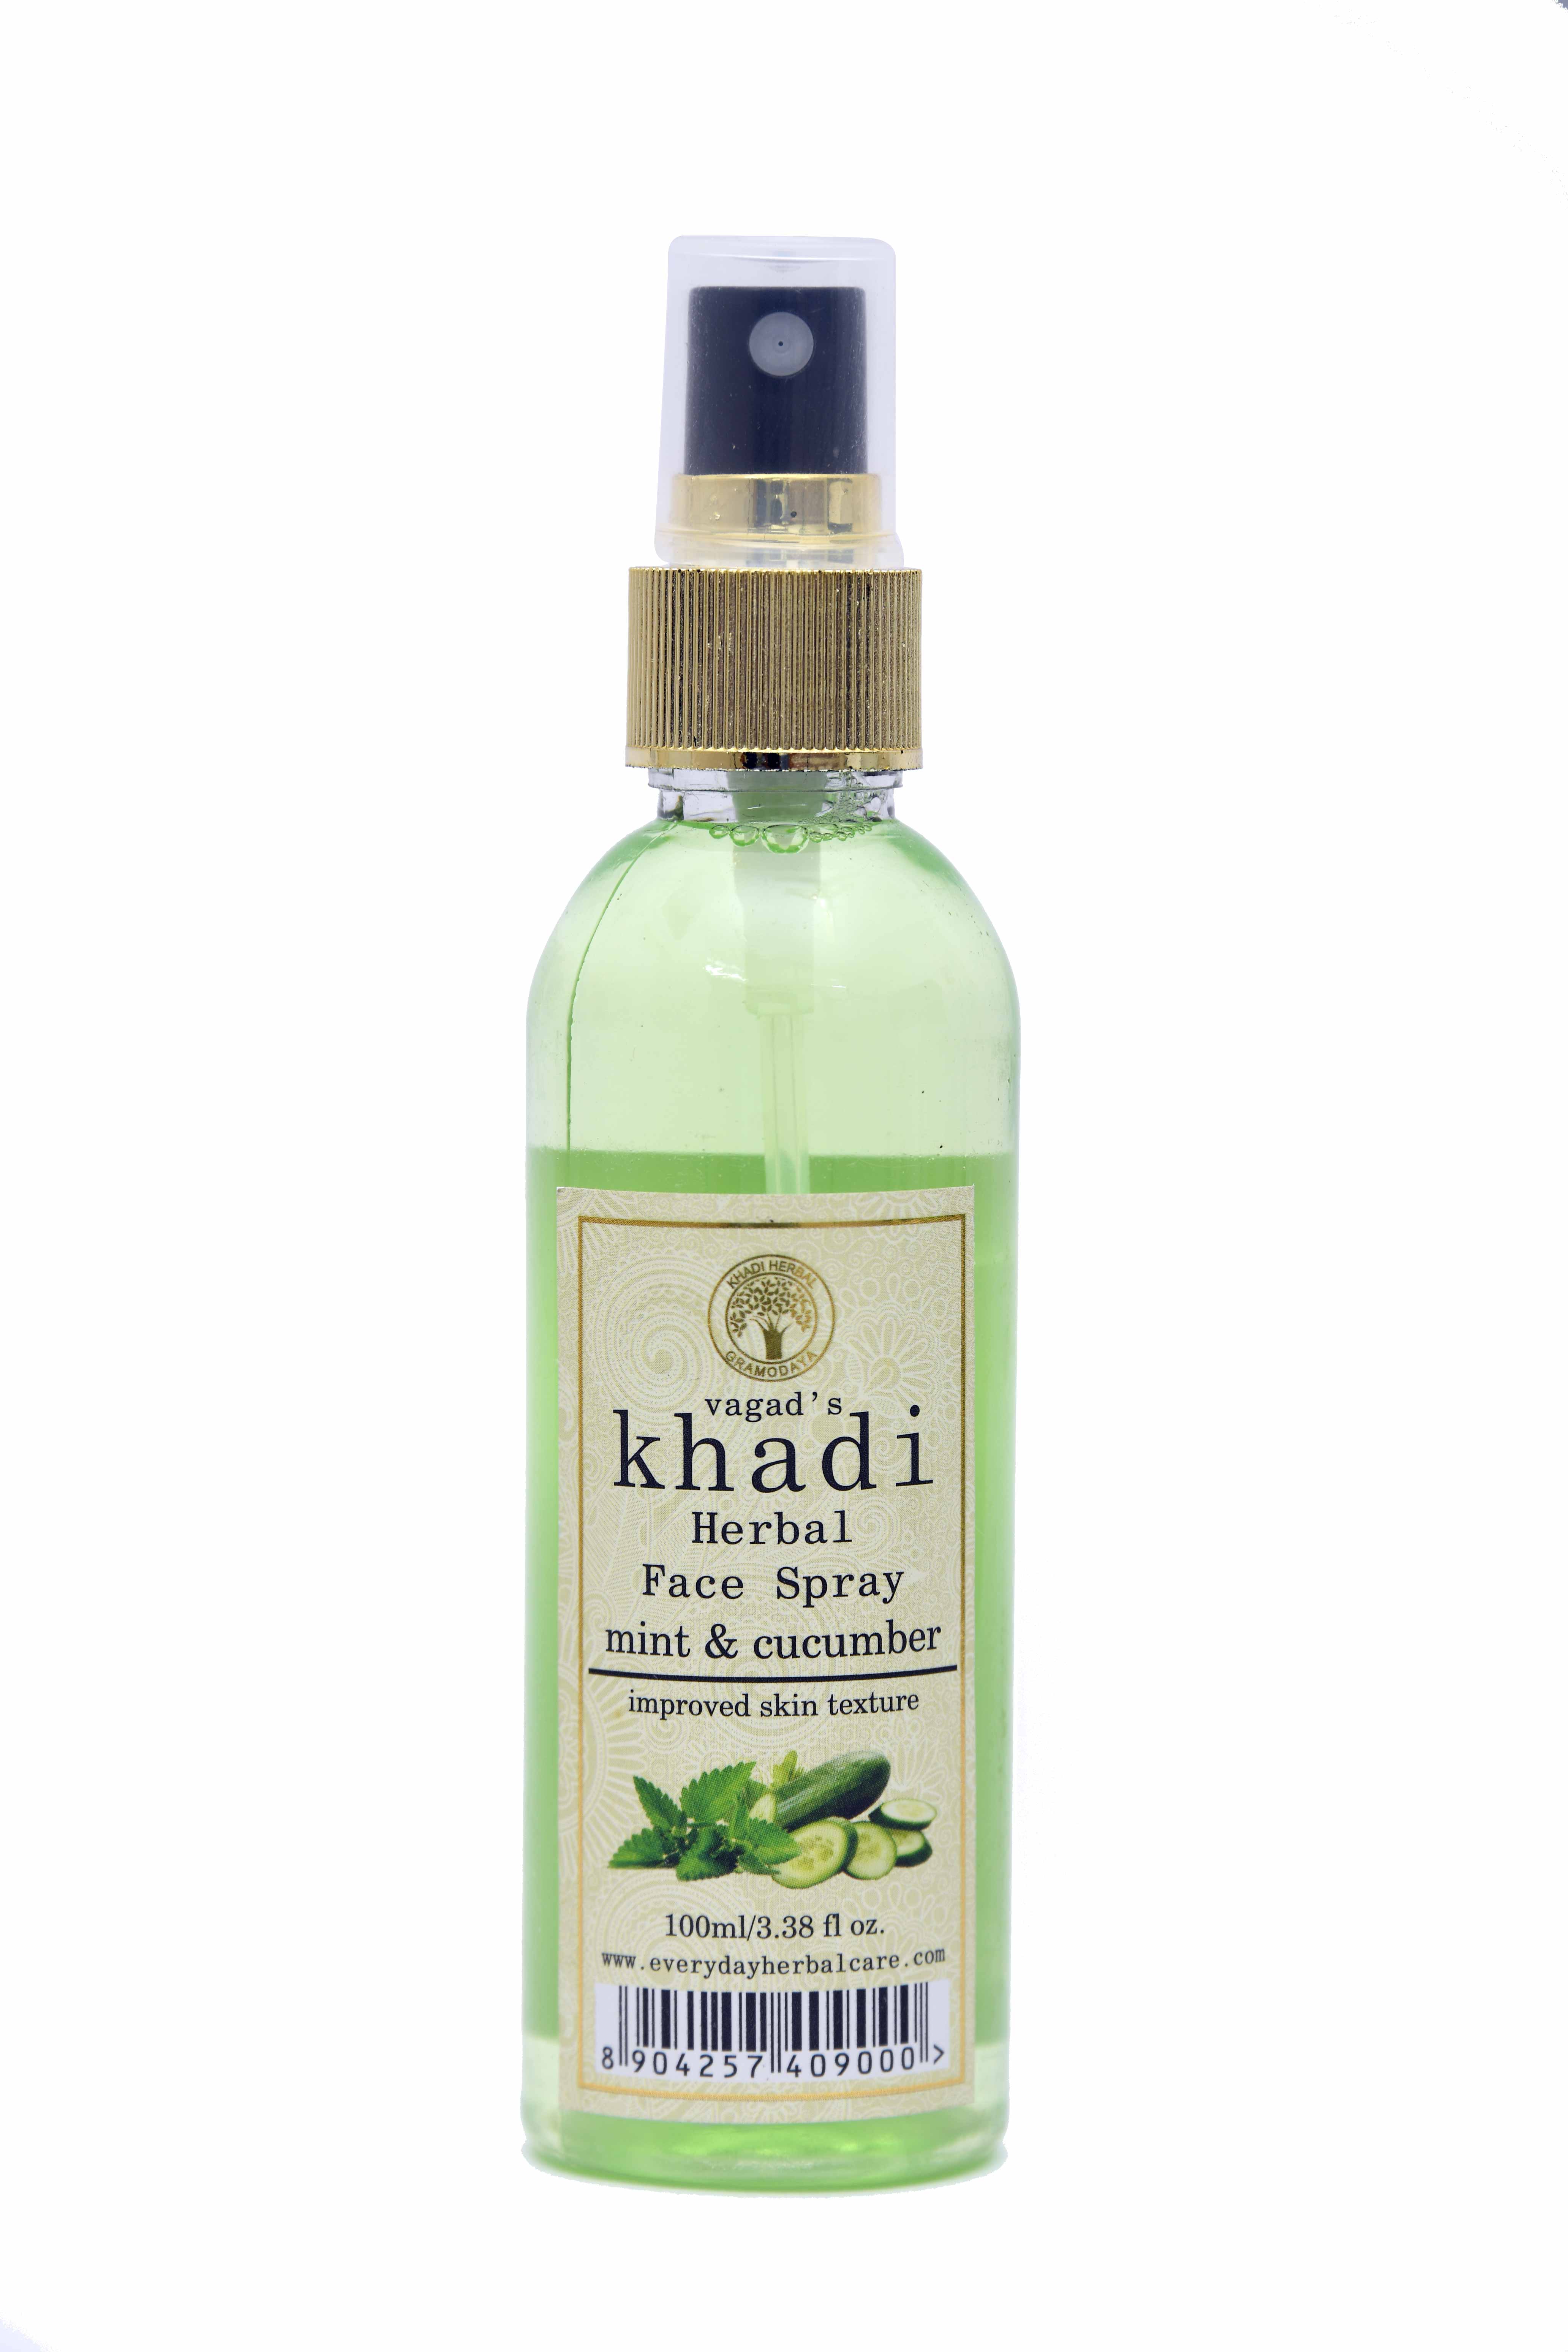 Buy Vagad's Khadi Mint Cucumber Face Spray at Best Price Online